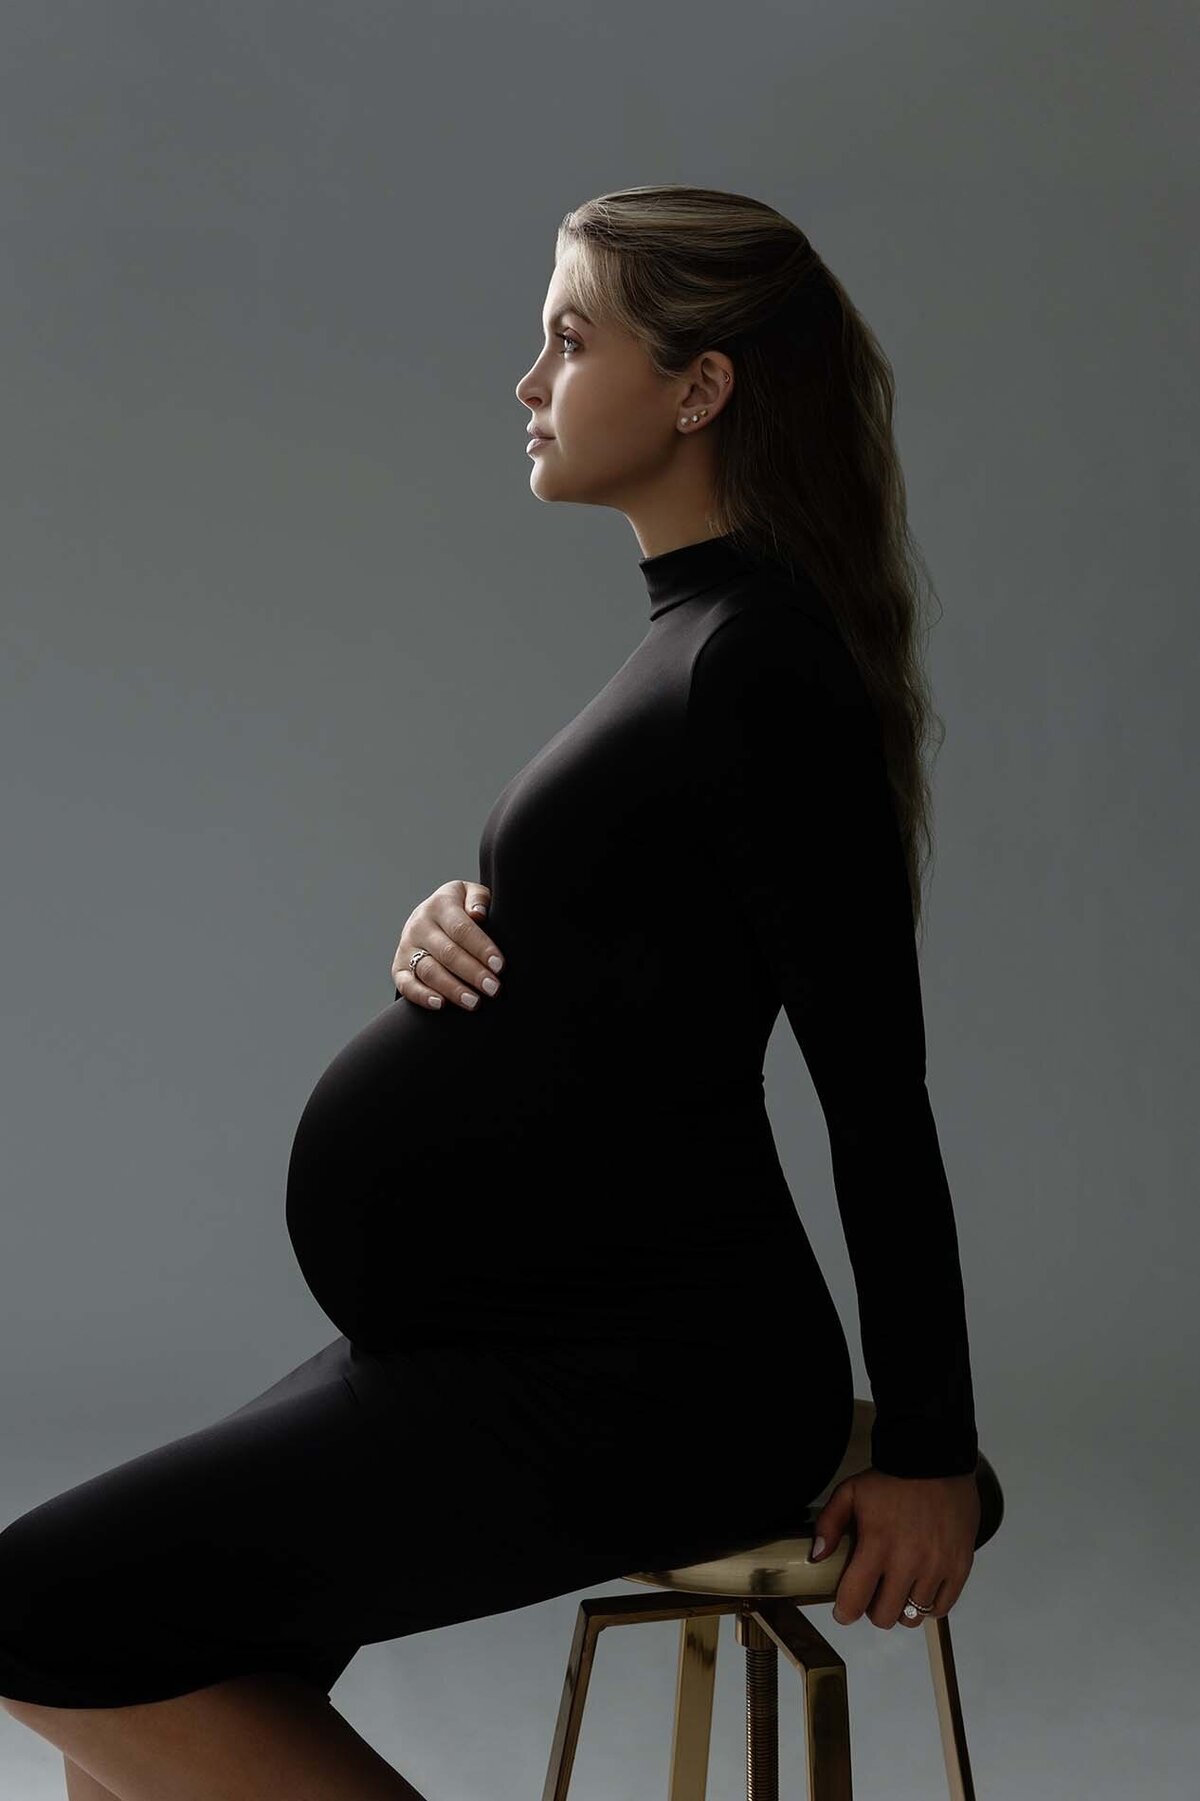 maryland maternity photographer, maternity photography near me, professional maternity photos, pregnancy photoshoot